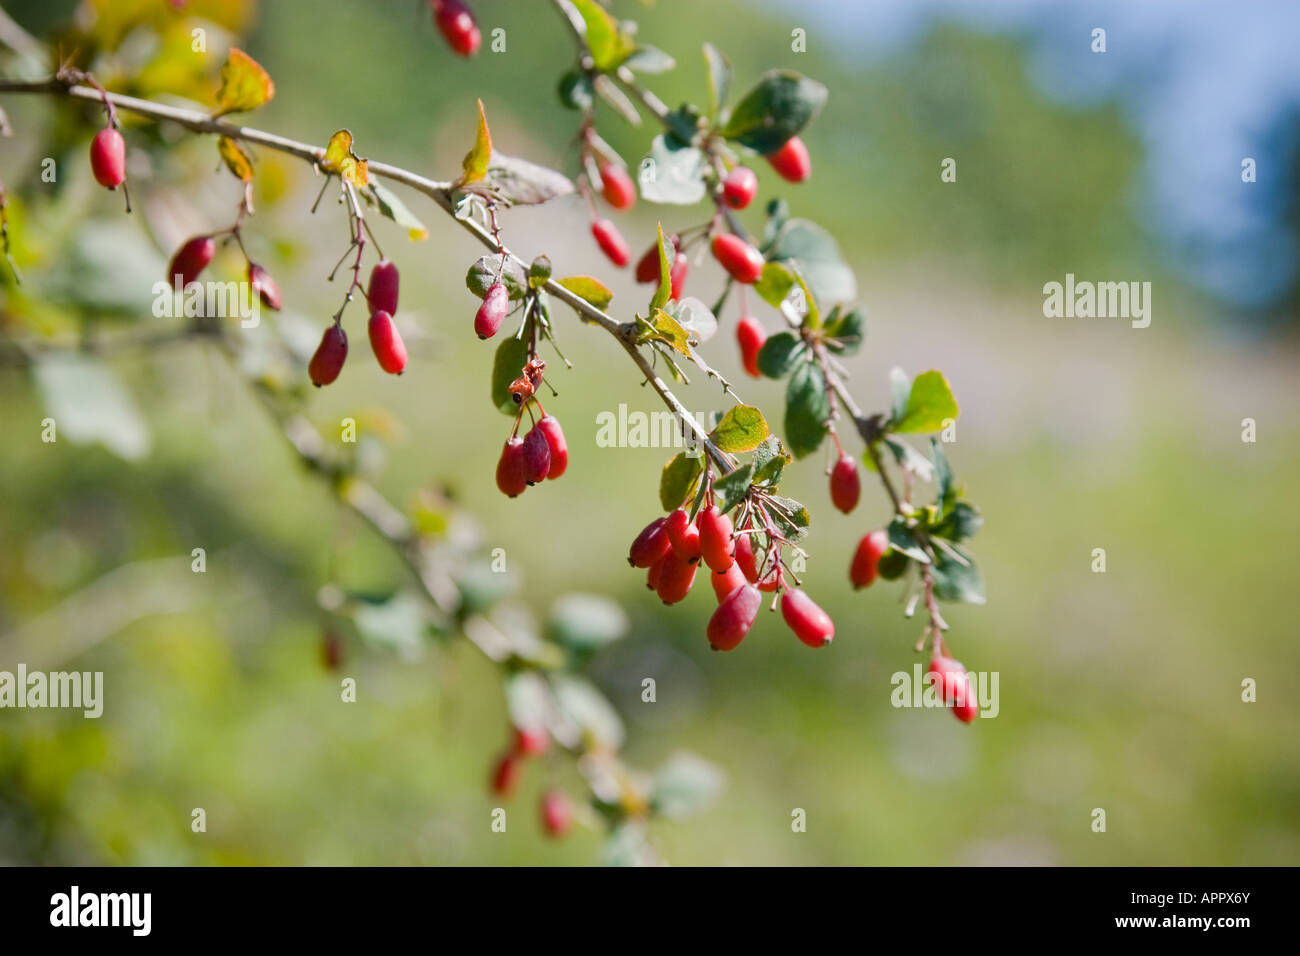 Japanese Barberry (Berberis, Goji) branch and berries close-up, (Berberis thunbergii); as seen in Germany, Europe Stock Photo